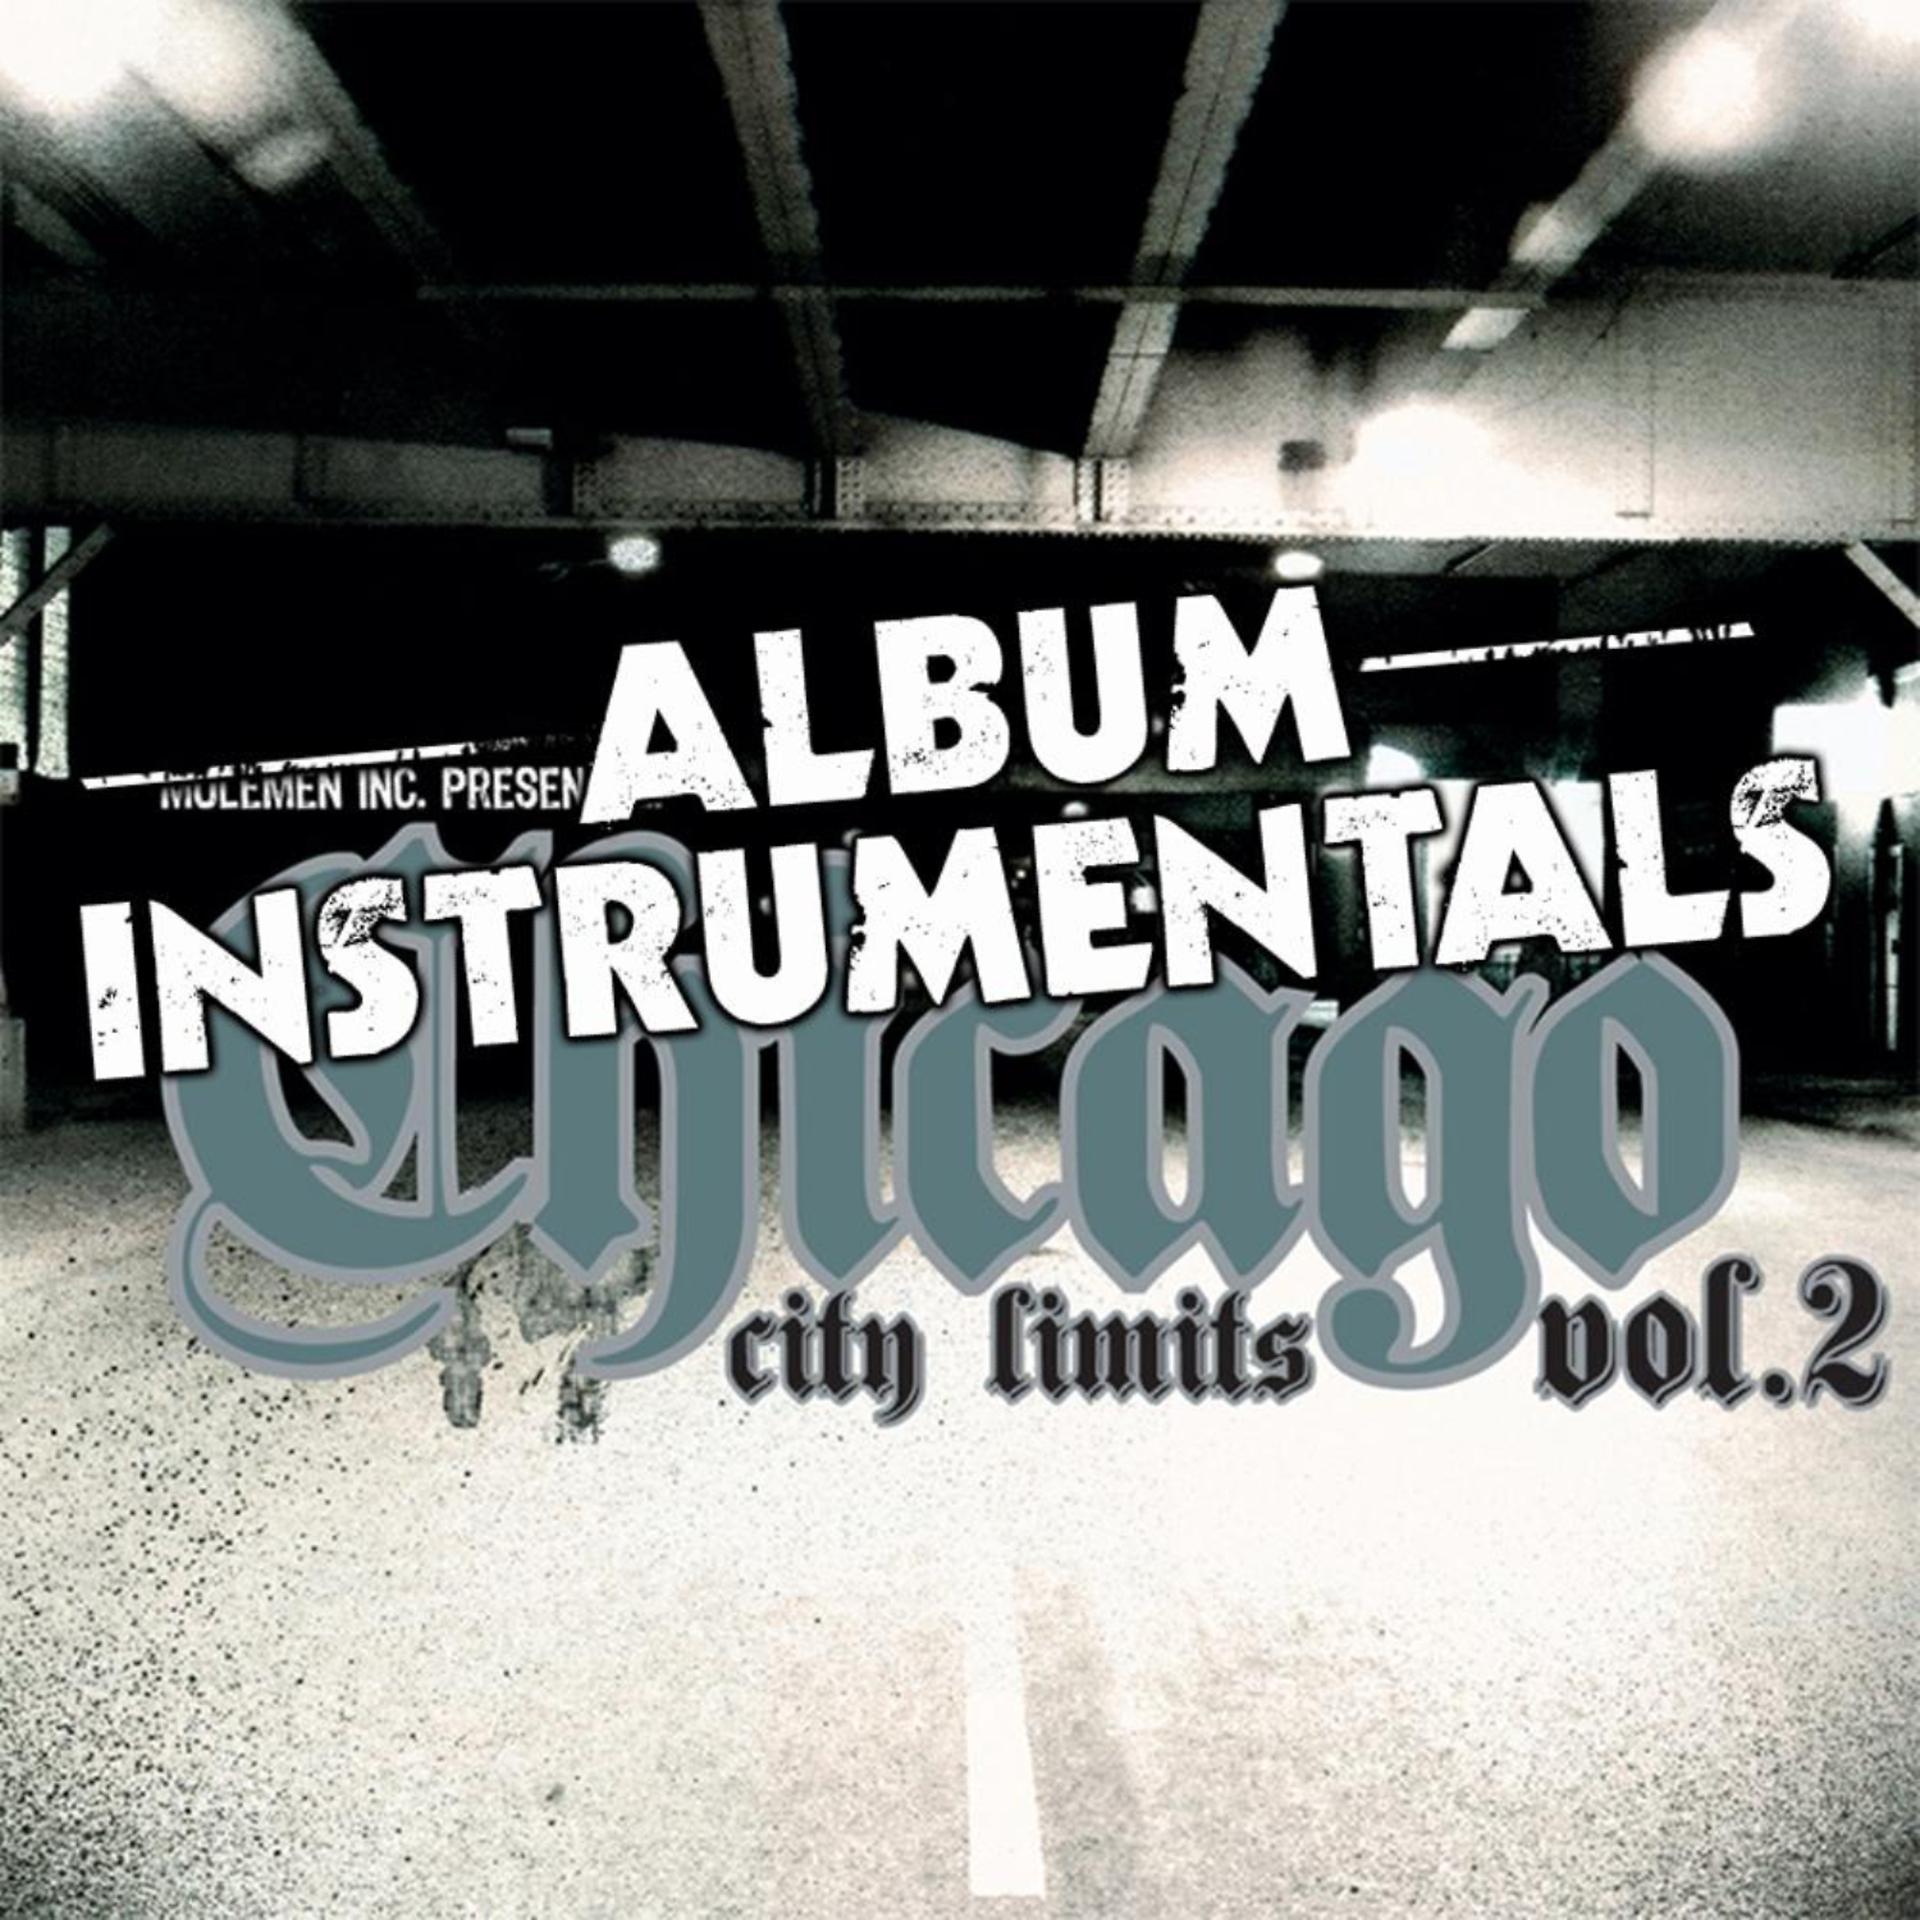 Постер альбома Chicago City Limits Vol. 2 - Instrumentals